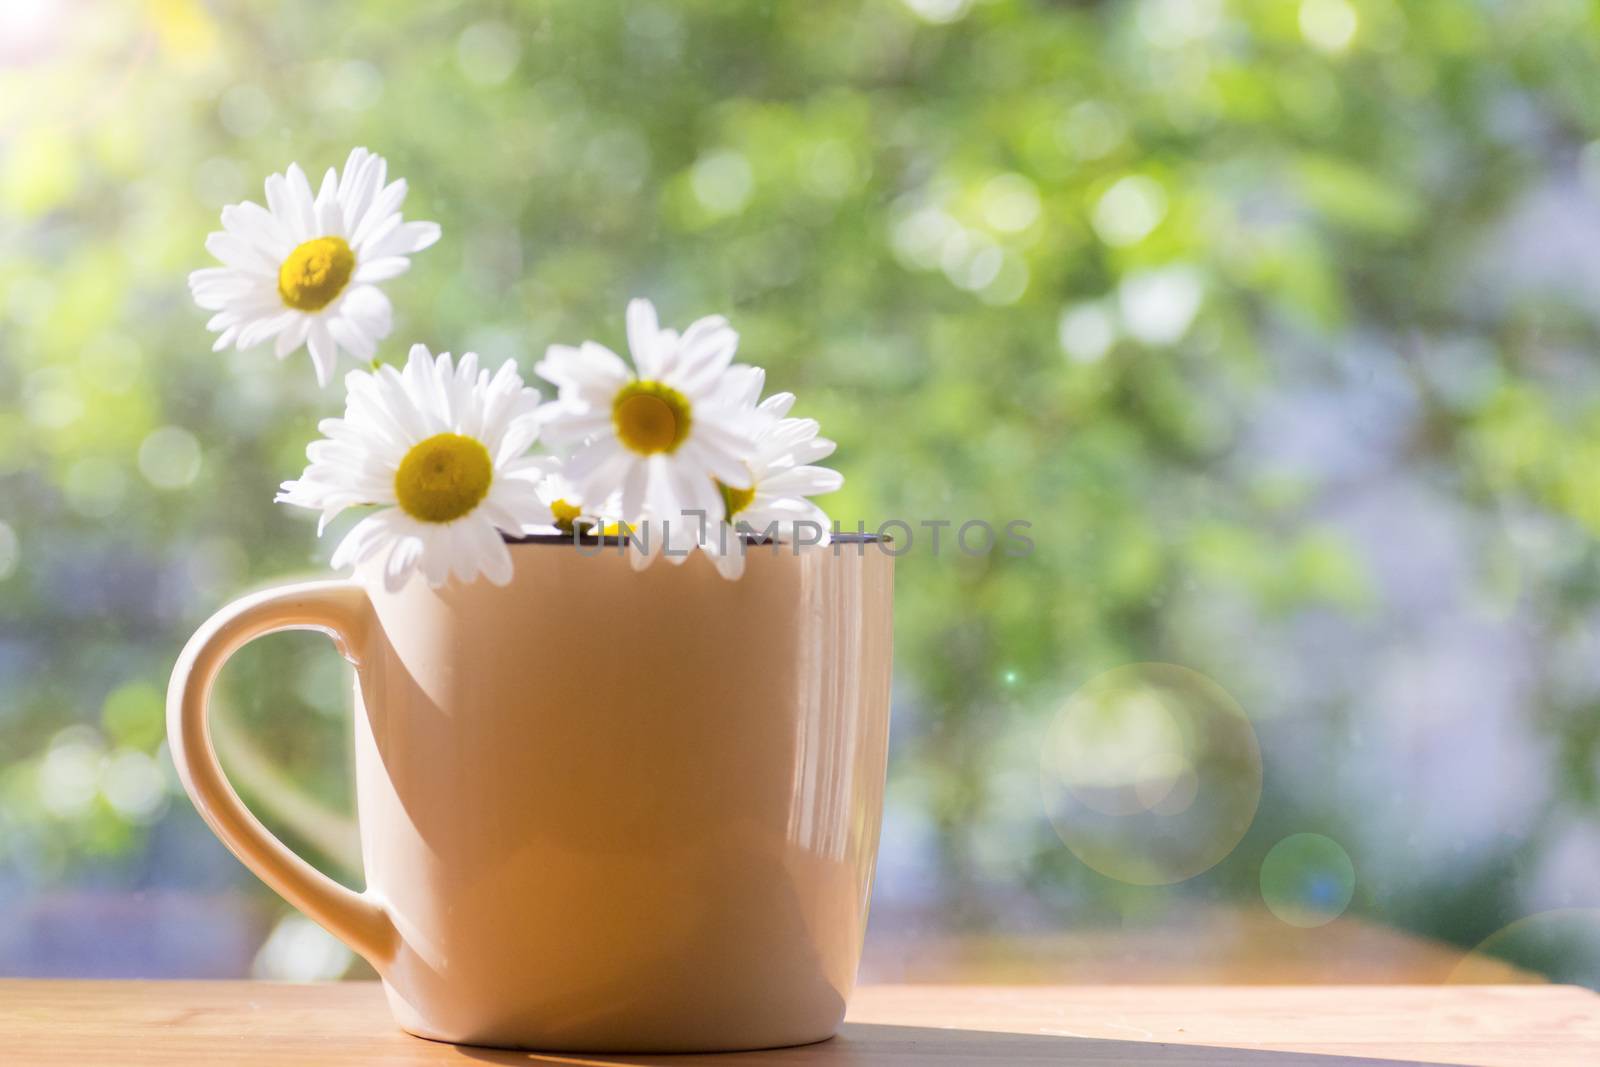 Mug with daisies